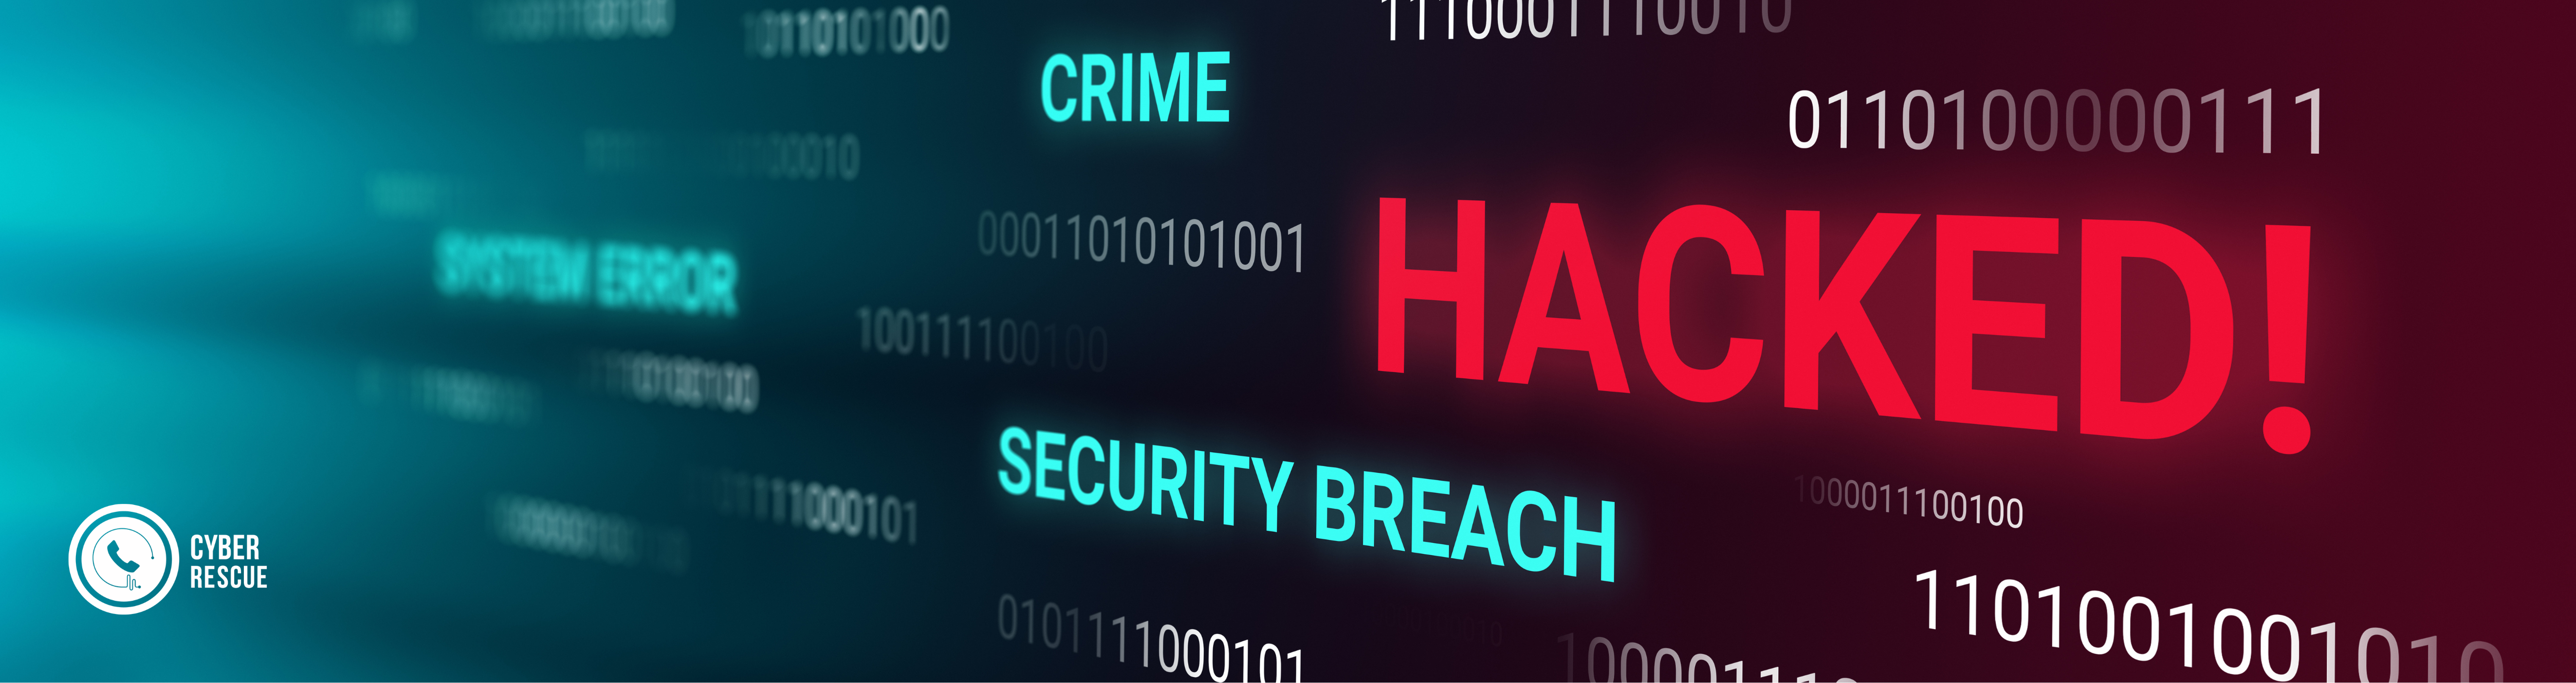 Co wiemy o atakach ransomware?